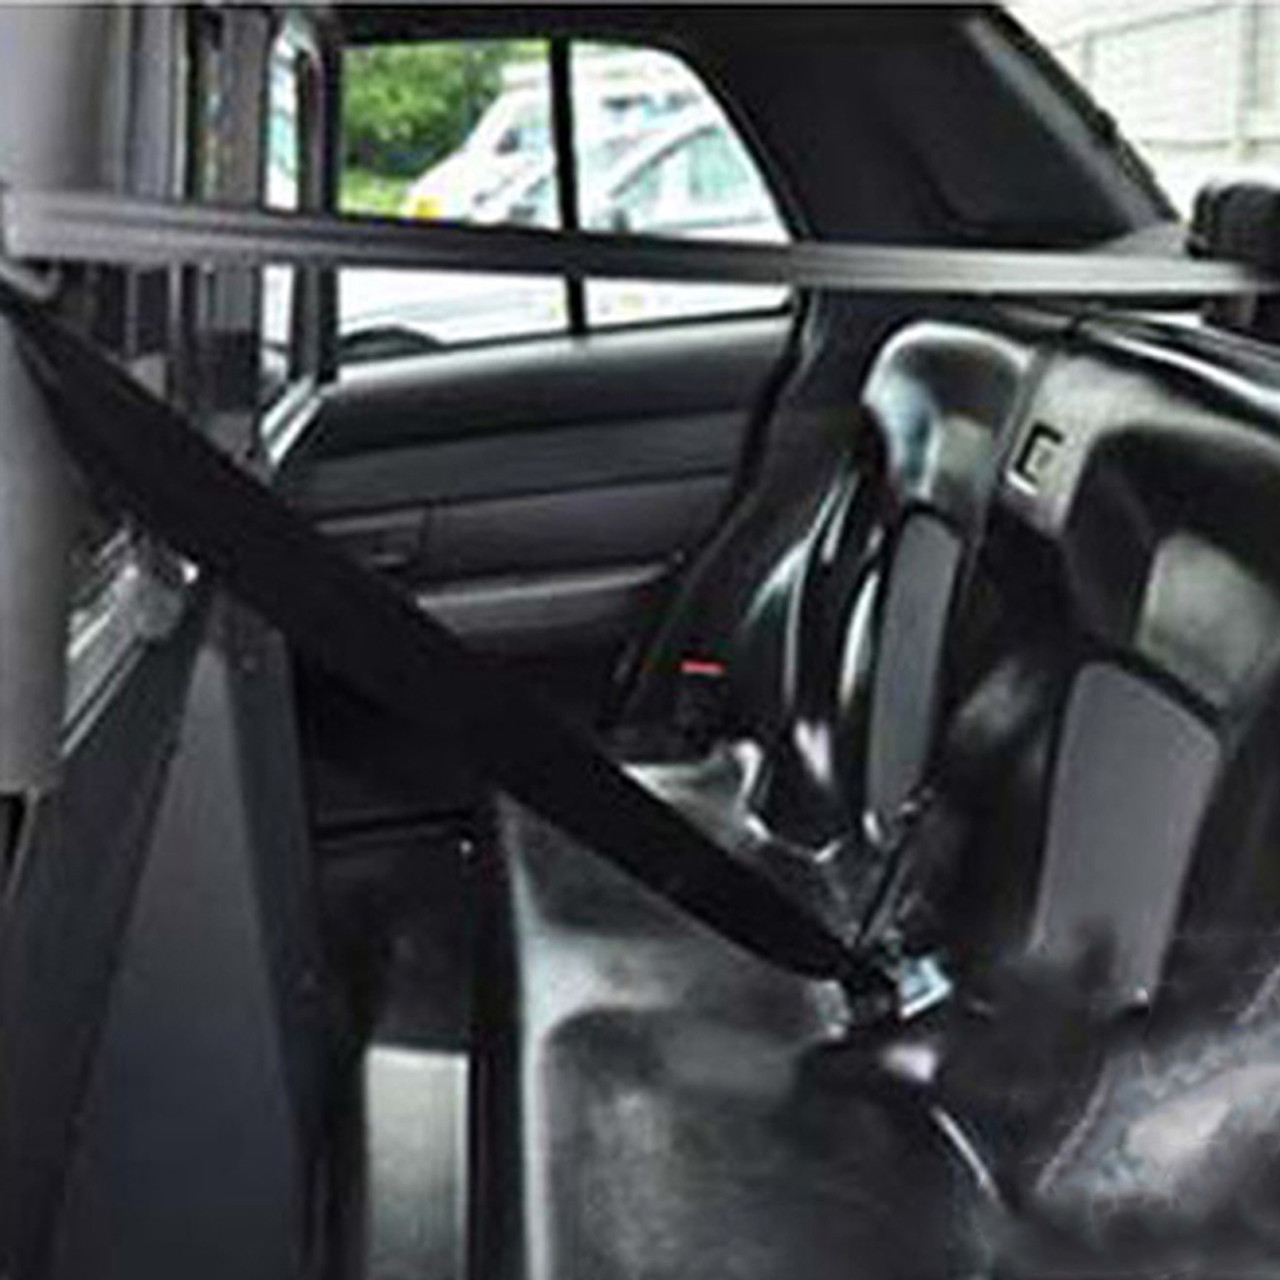 Ready Buckle Seat Belt Kits by Laguna 3P - Dana Safety Supply